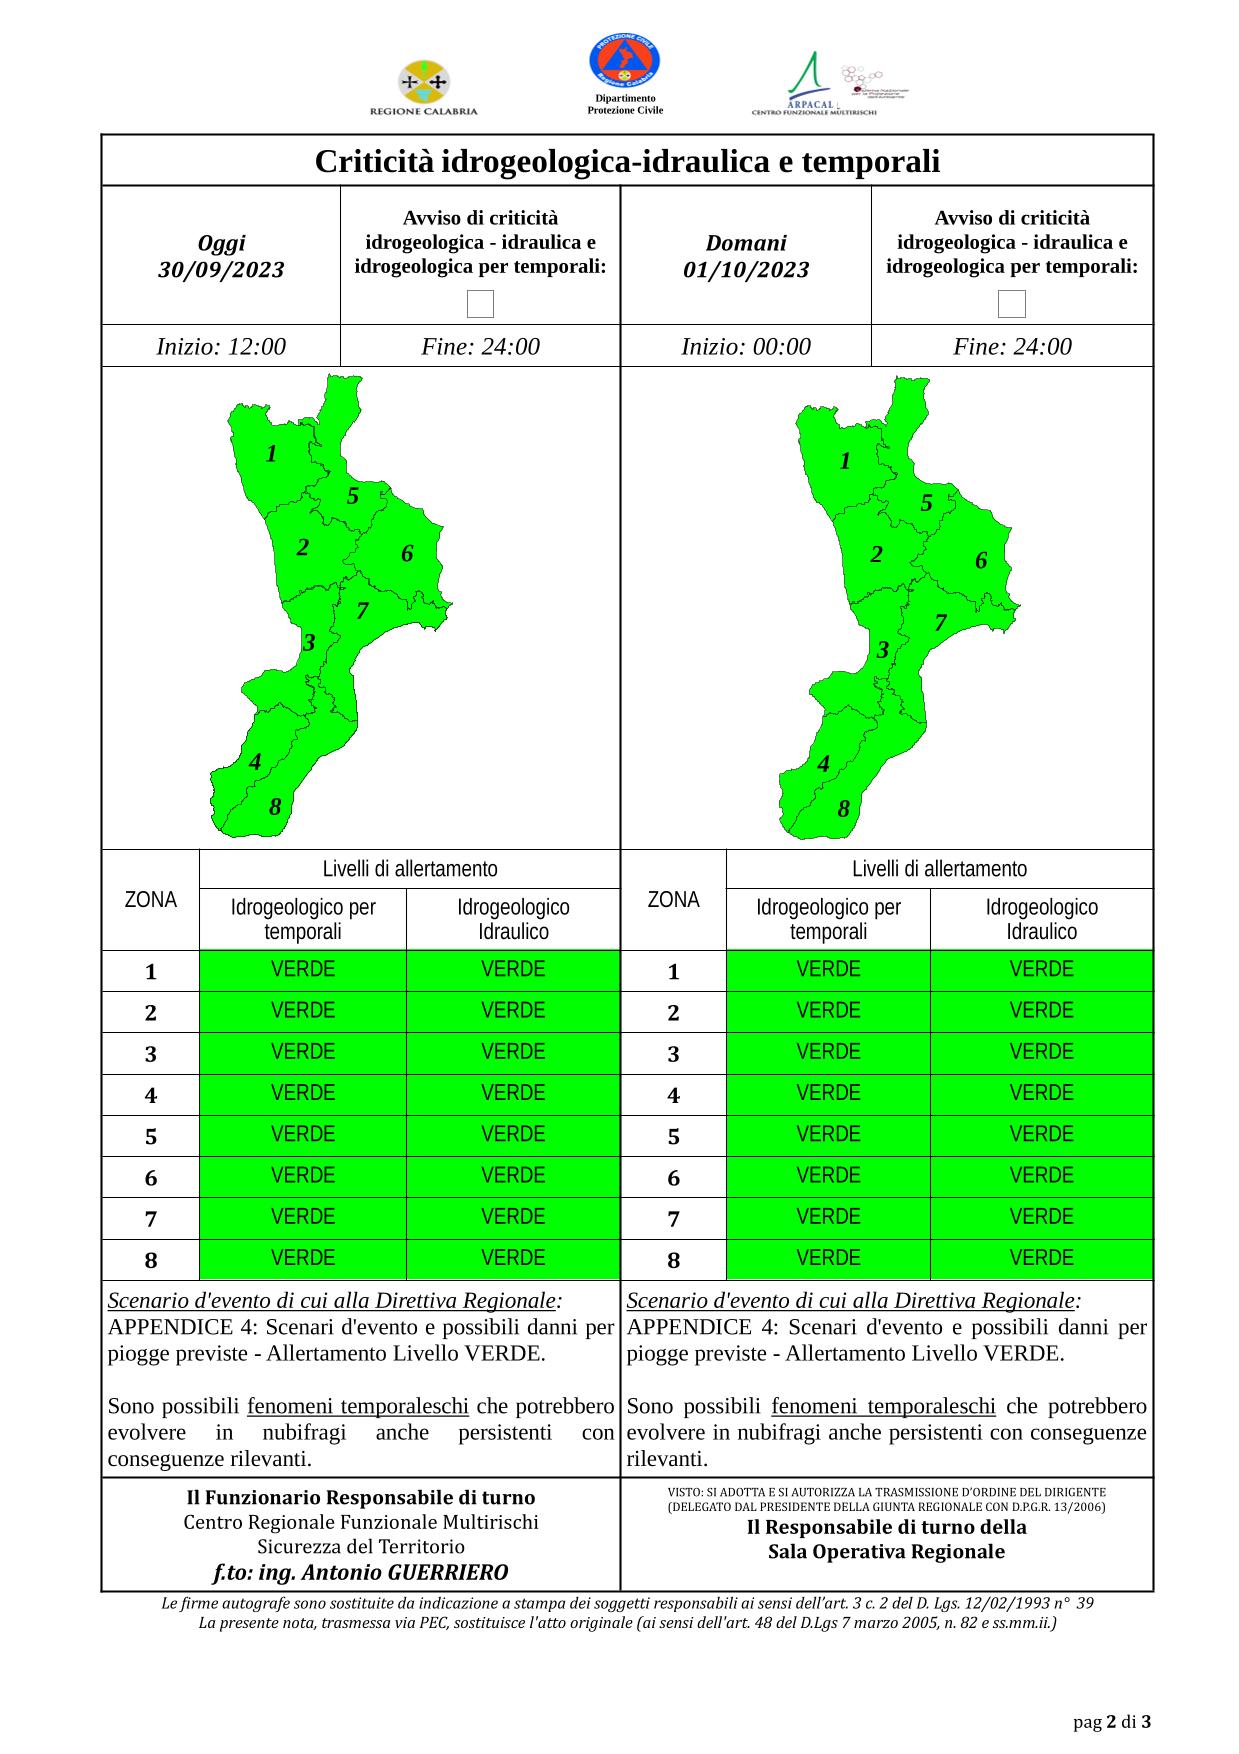 Criticità idrogeologica-idraulica e temporali in Calabria 30-09-2023